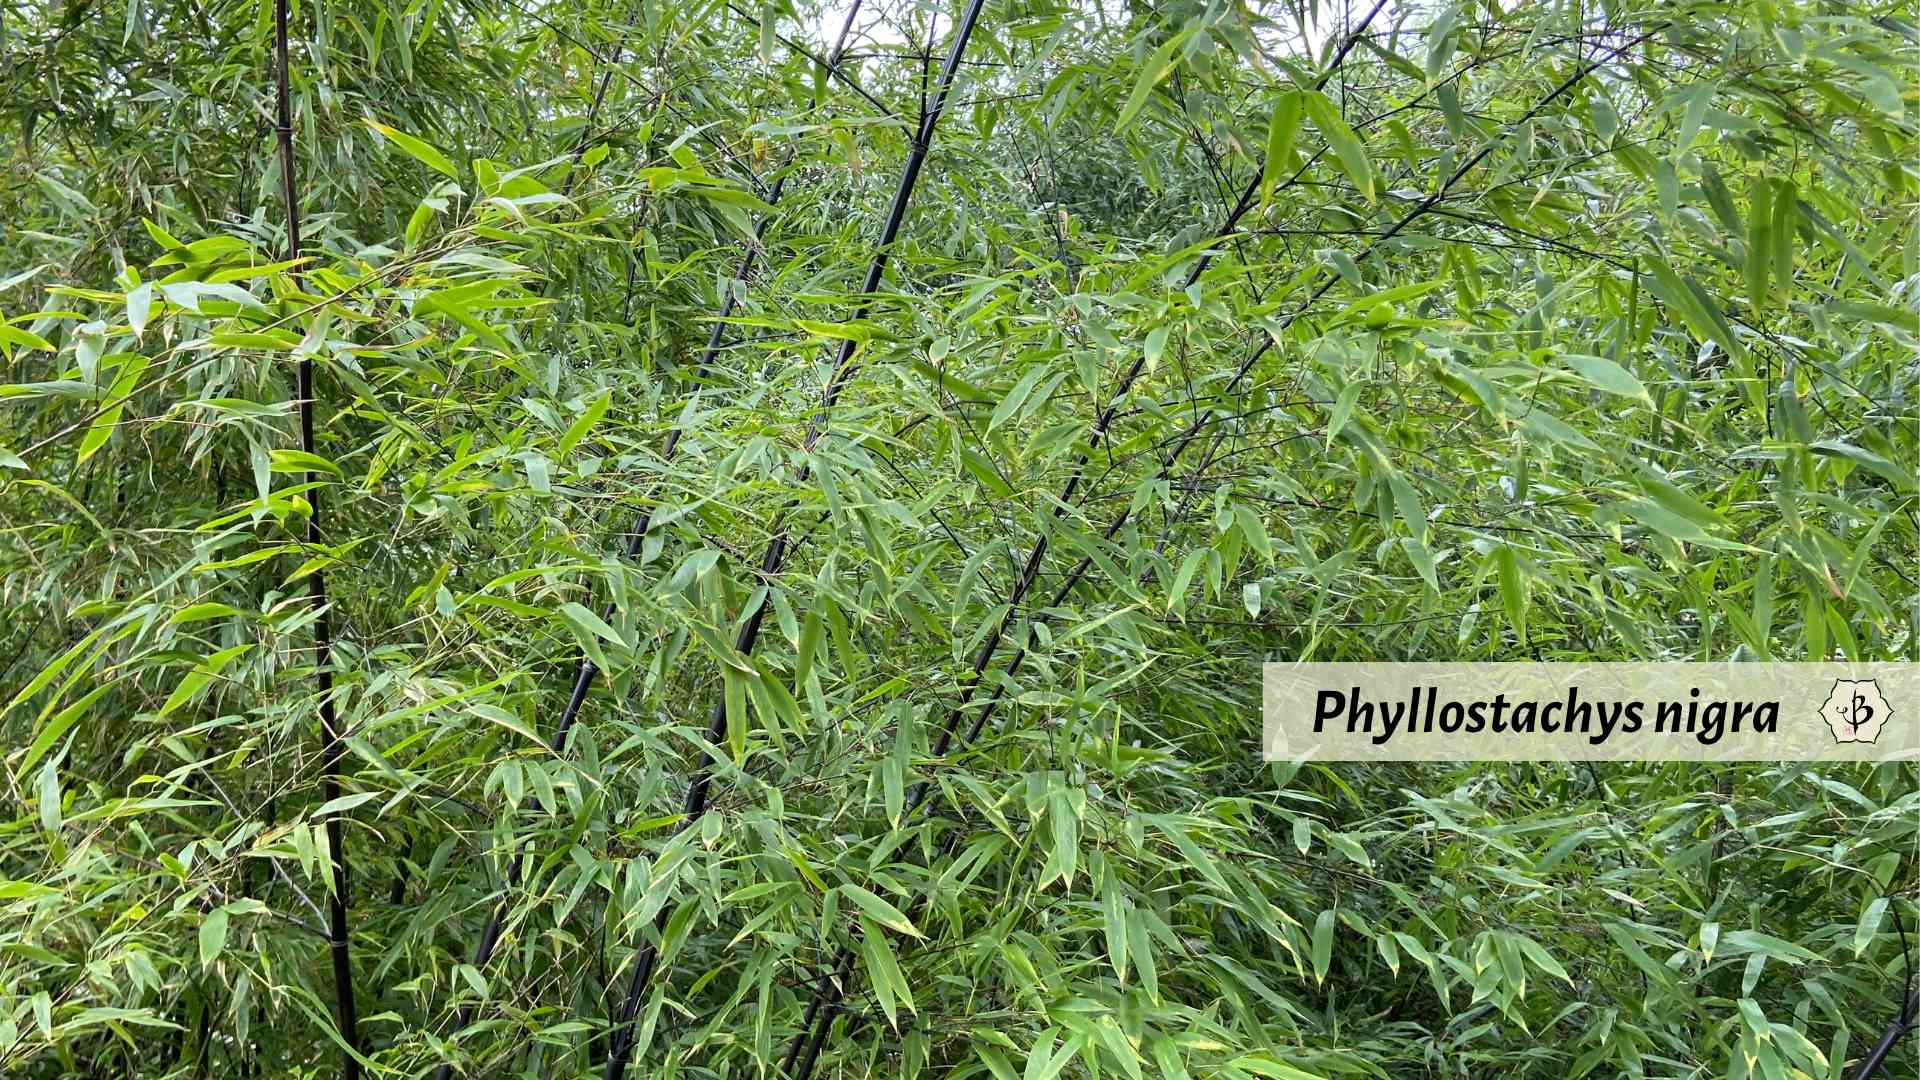 Phyllostachys nigra black bamboo Paris